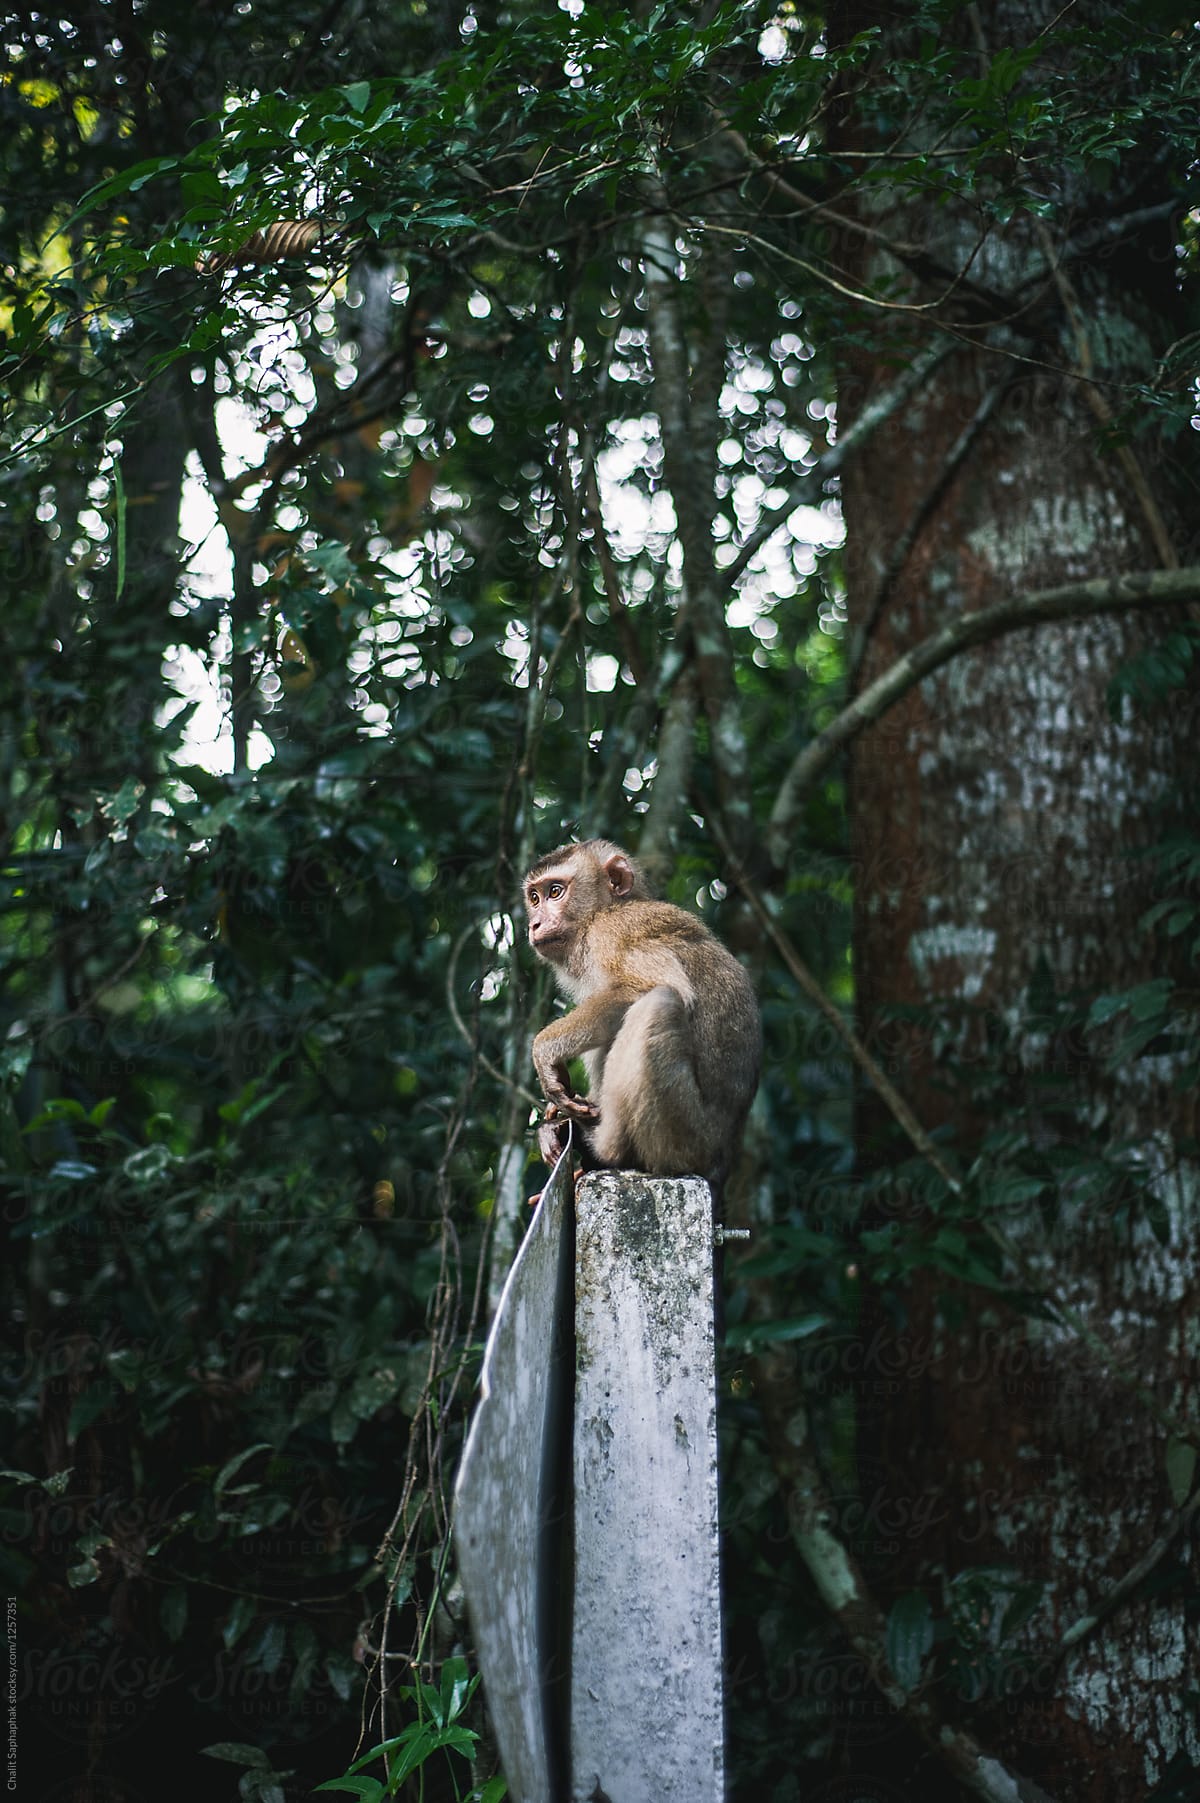 Monkey on traffic pole.